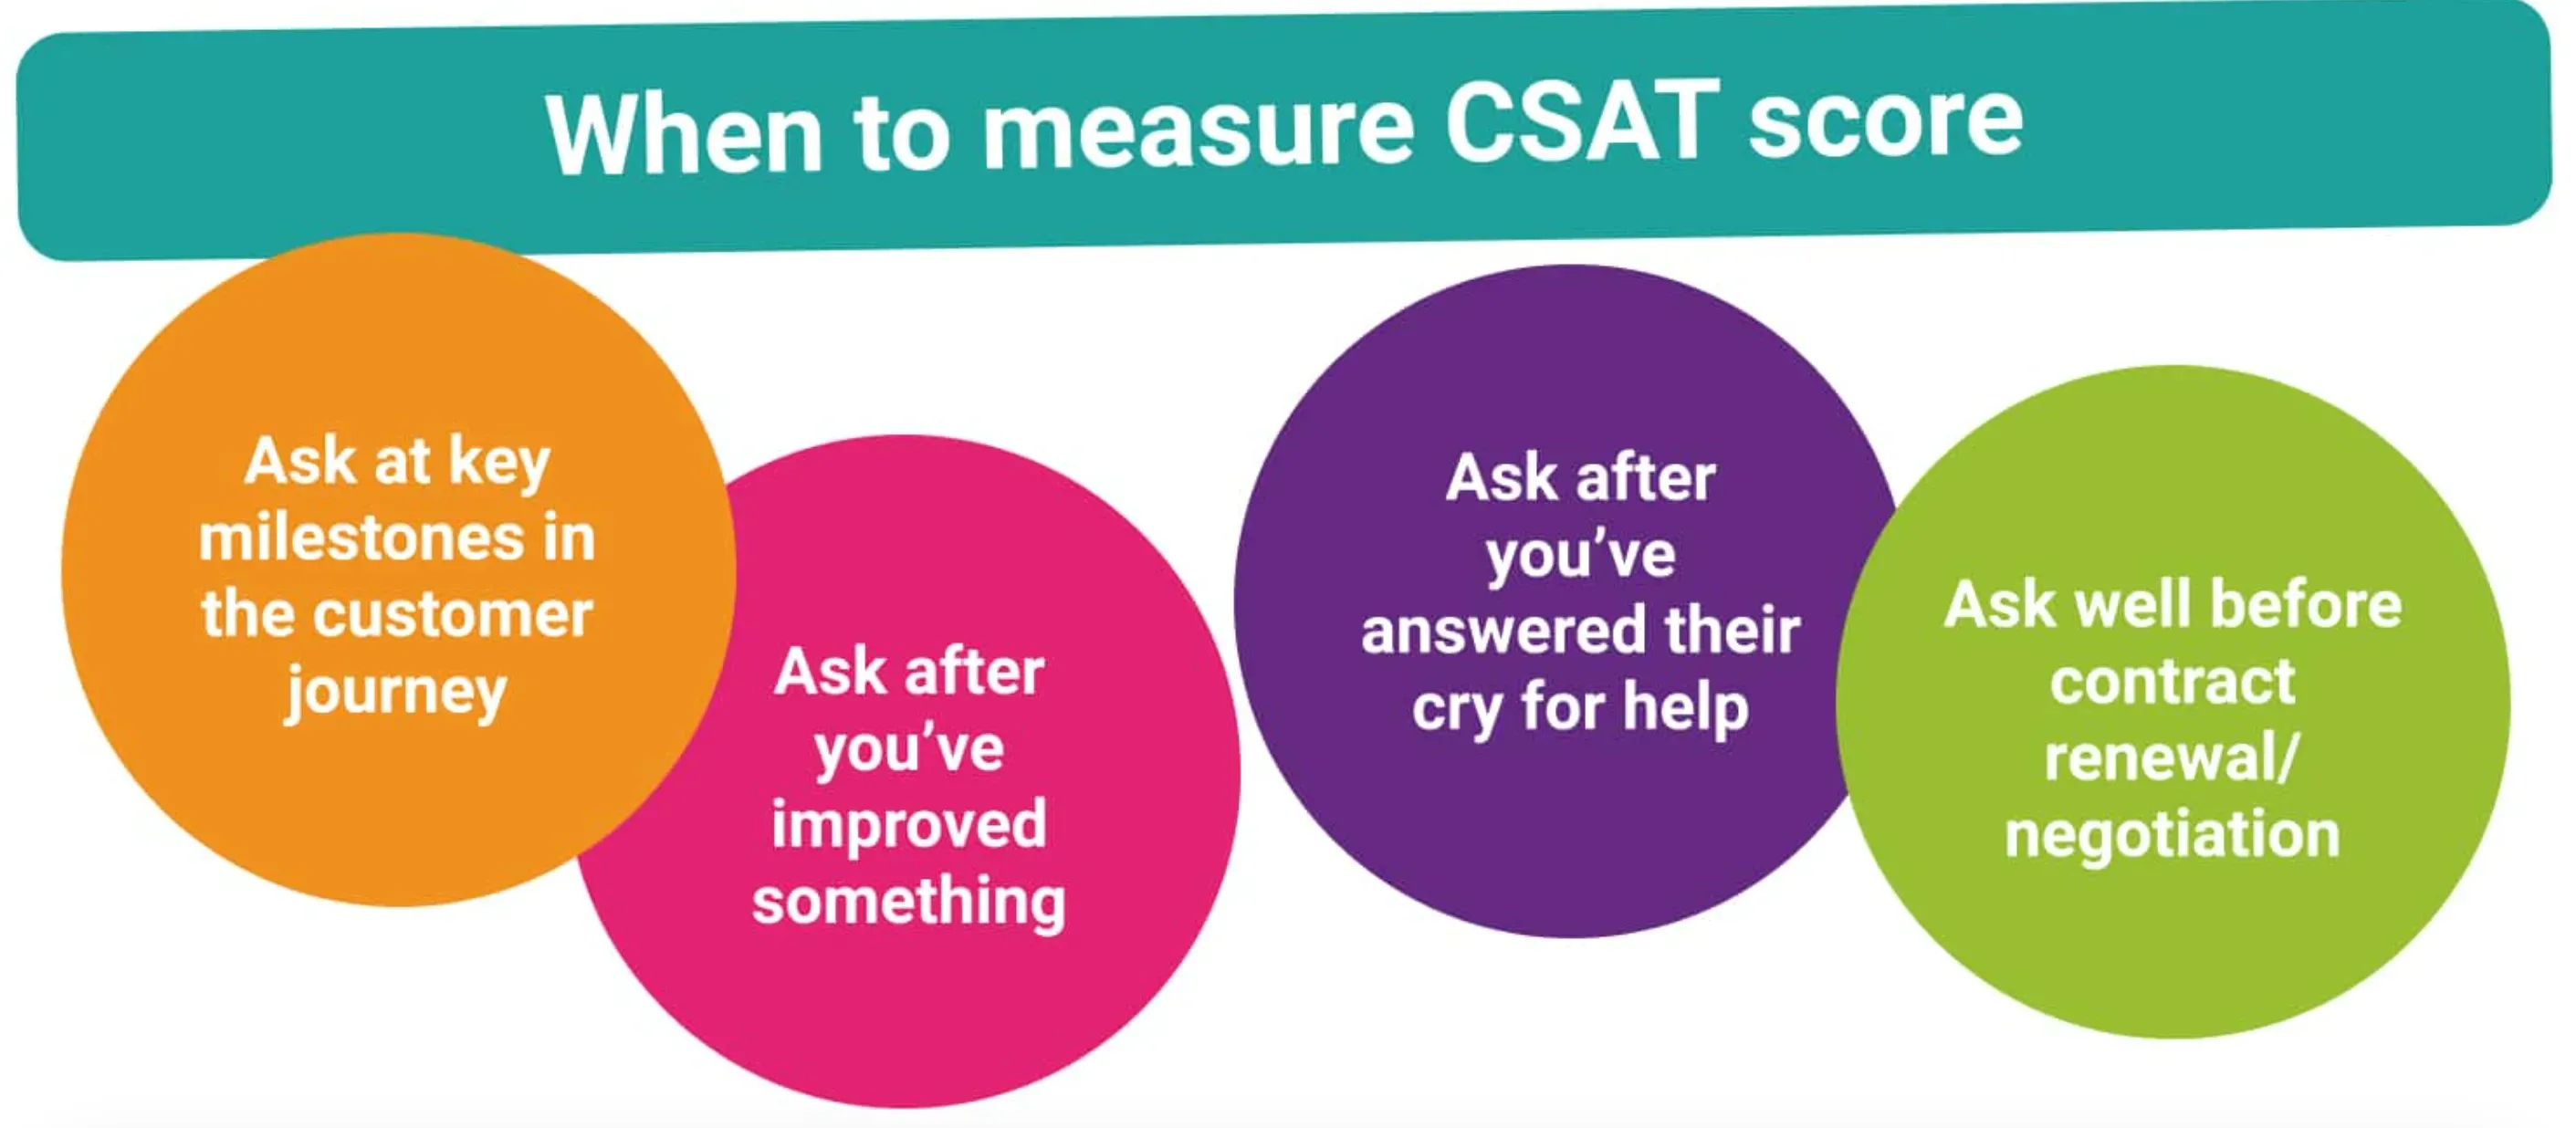 When is CSAT measured?